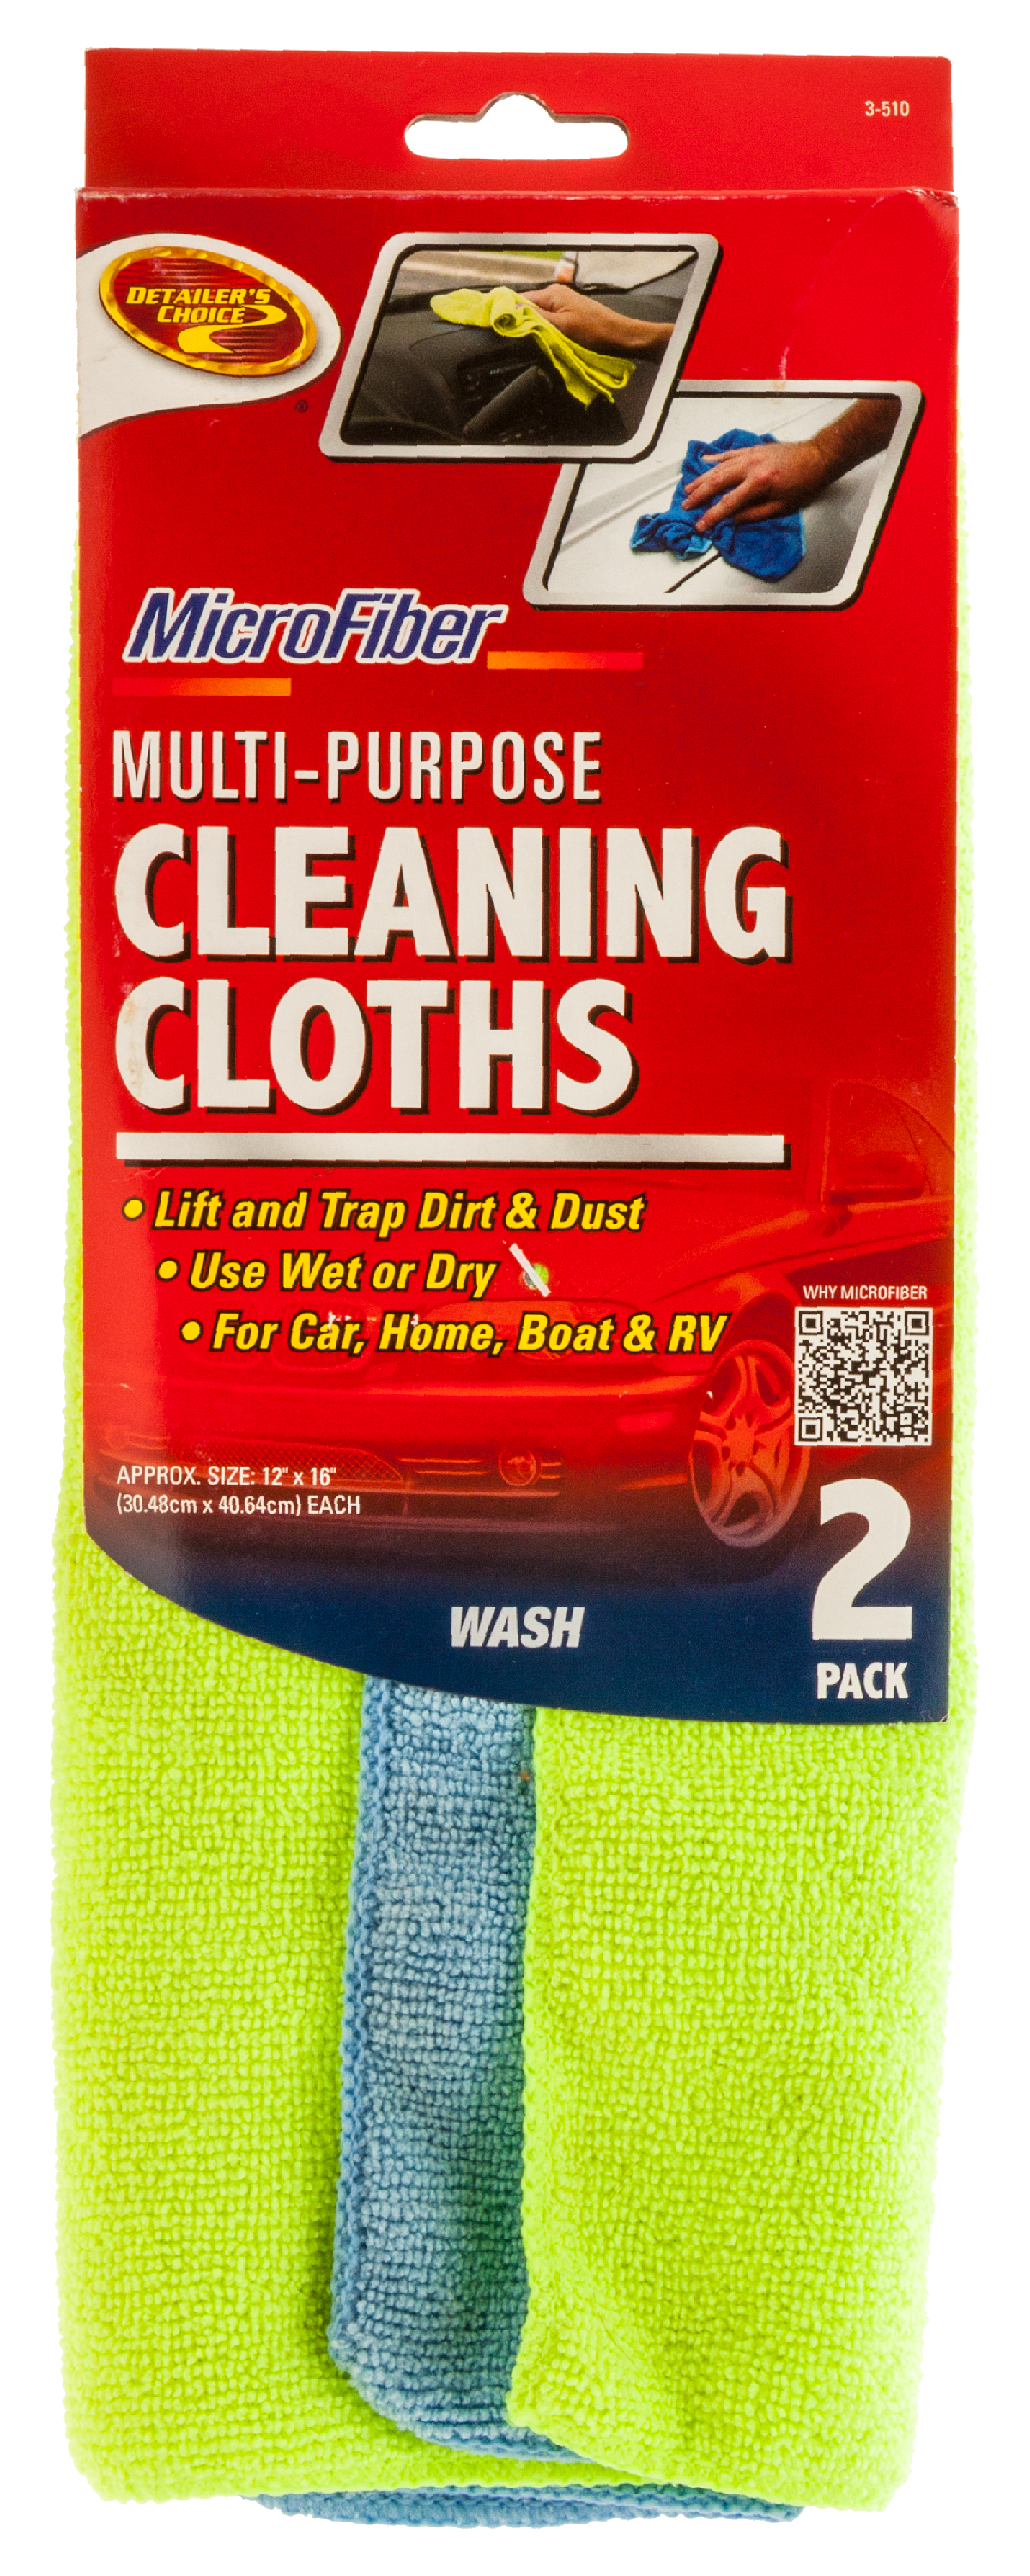 Microfiber Cleansing Cloths - 2 pack